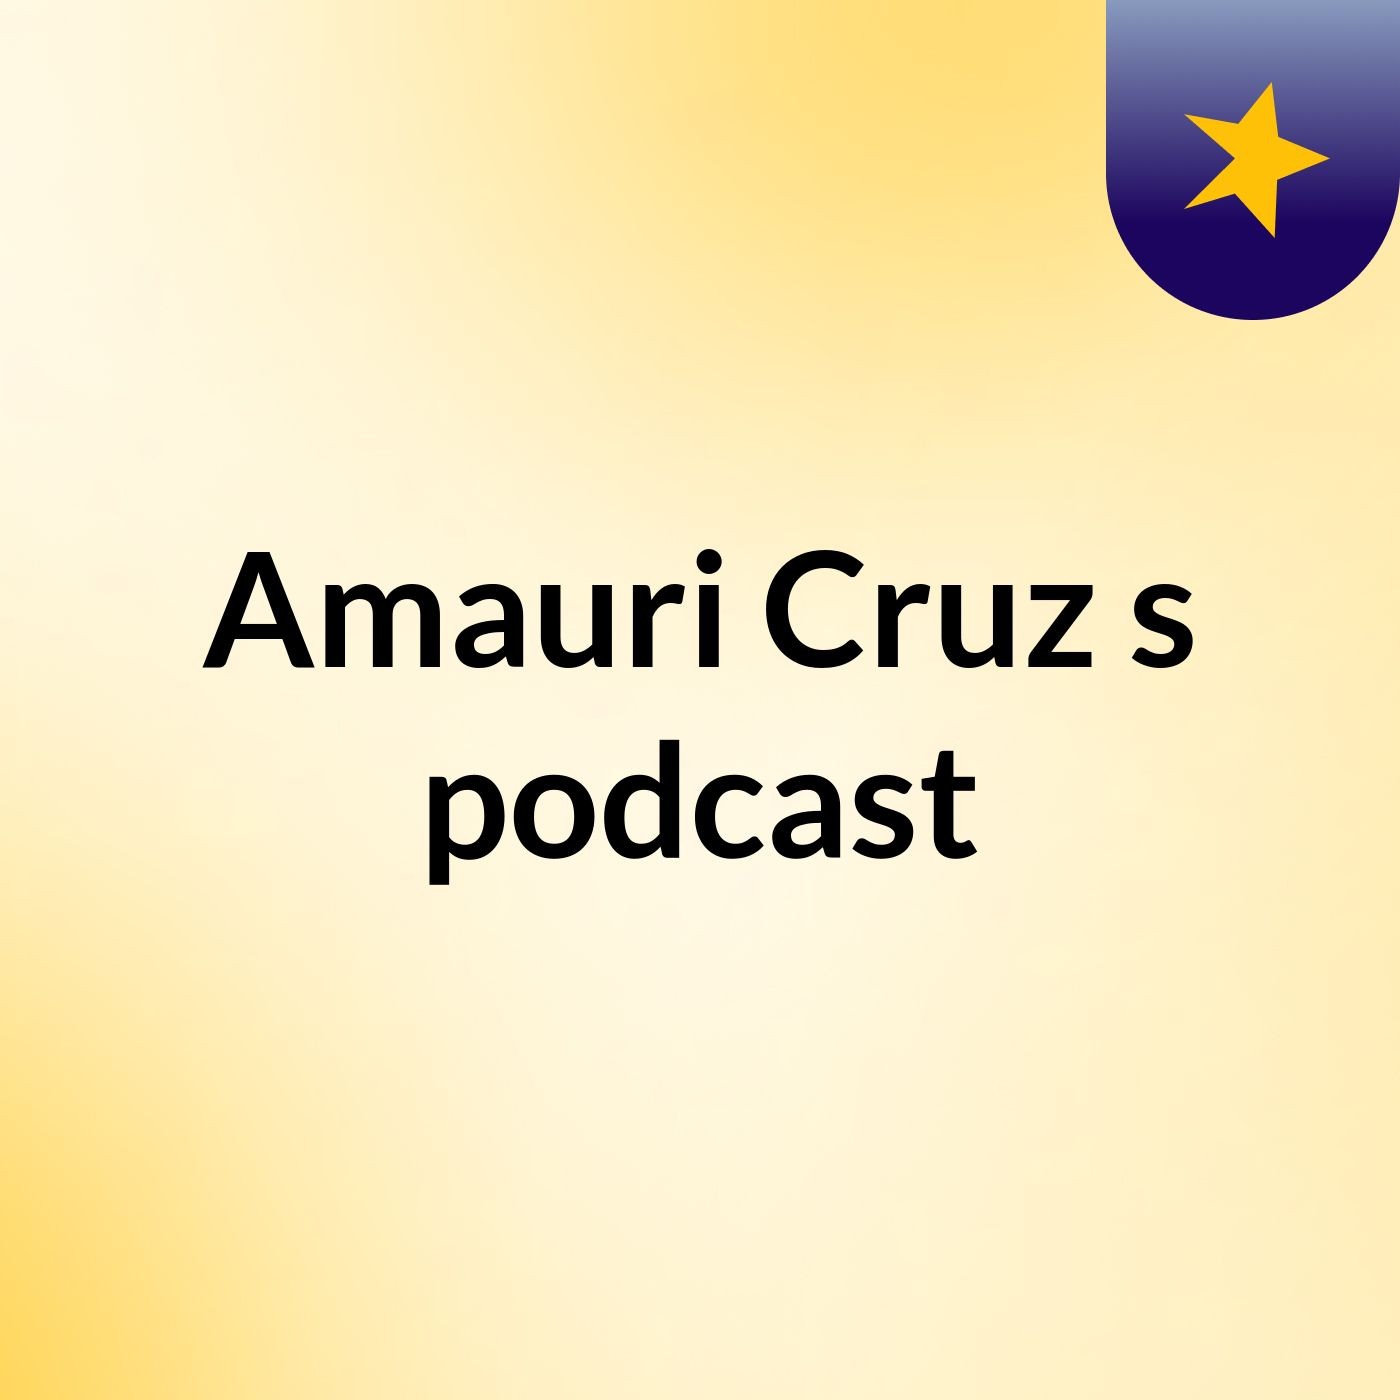 Amauri Cruz's podcast